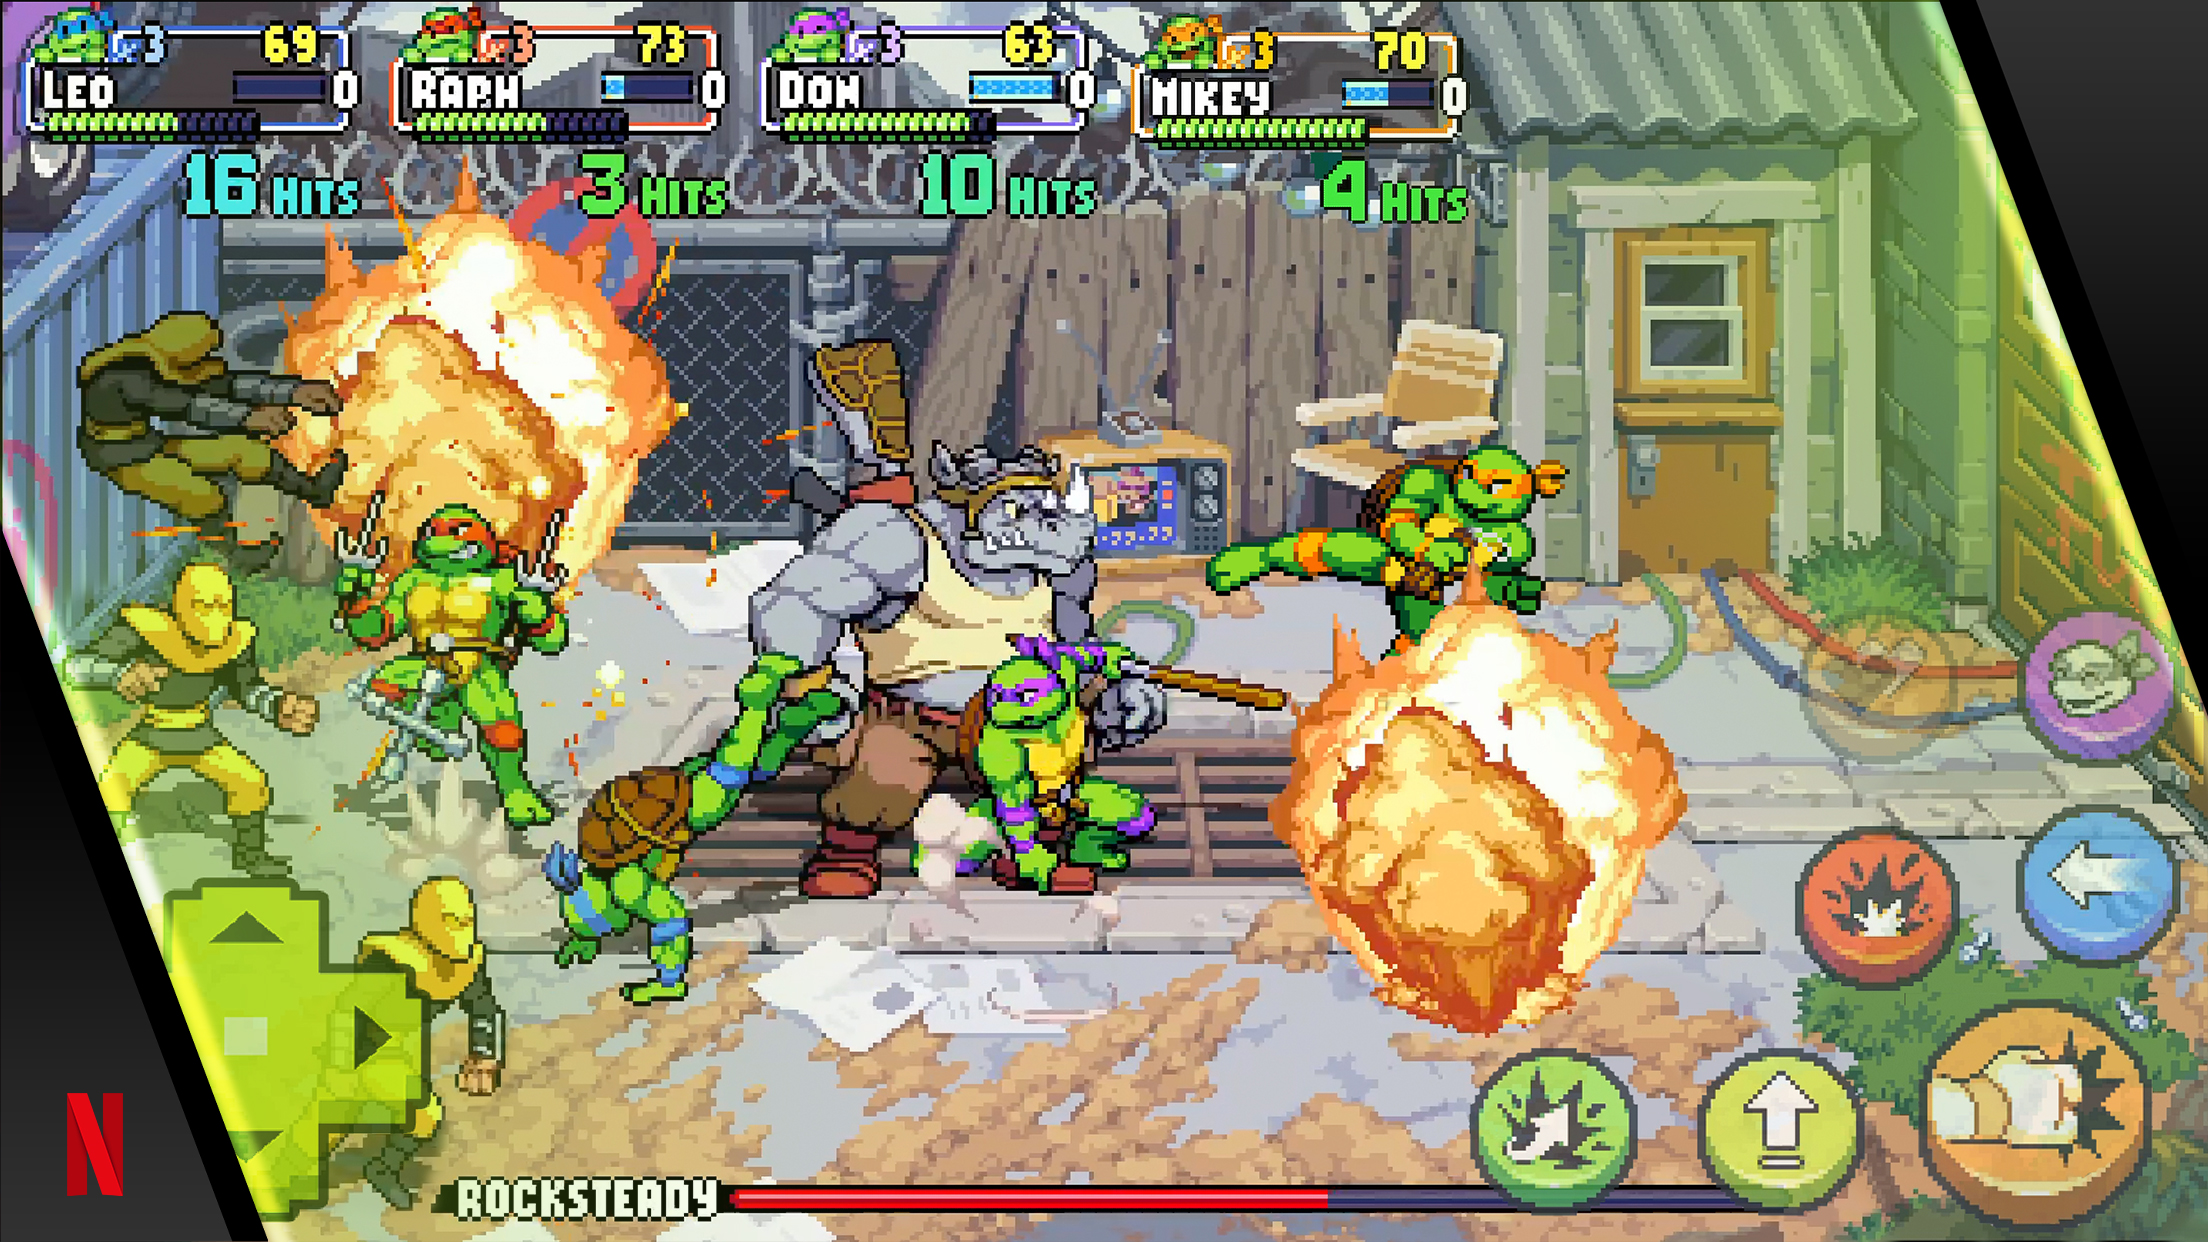 Tartarugas lutam contra Rocksteady em Teenage Mutant Ninja Turtles: Shredder's Revenge no celular.